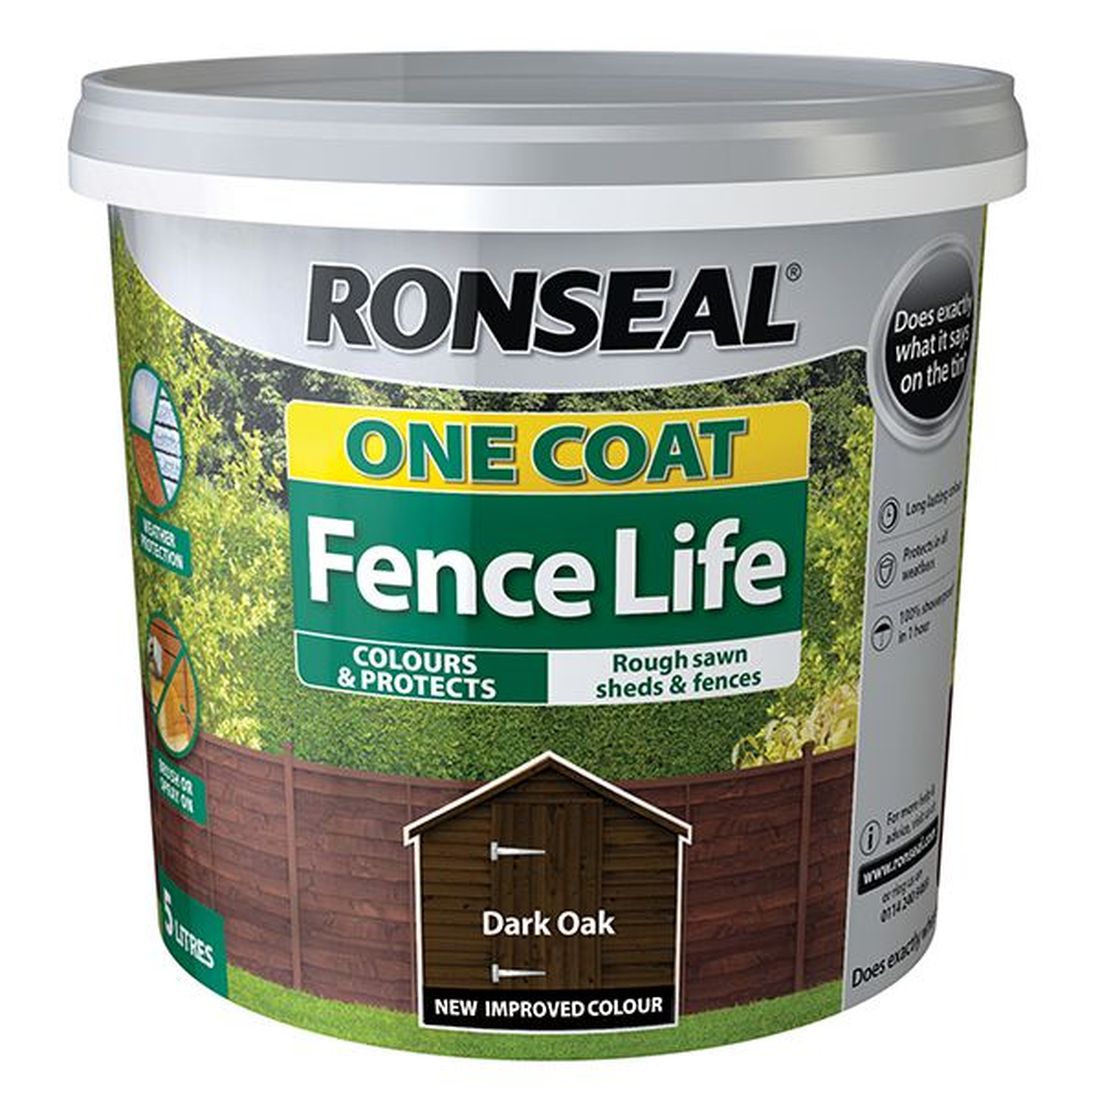 Ronseal One Coat Fence Life Dark Oak 5 litre                                            